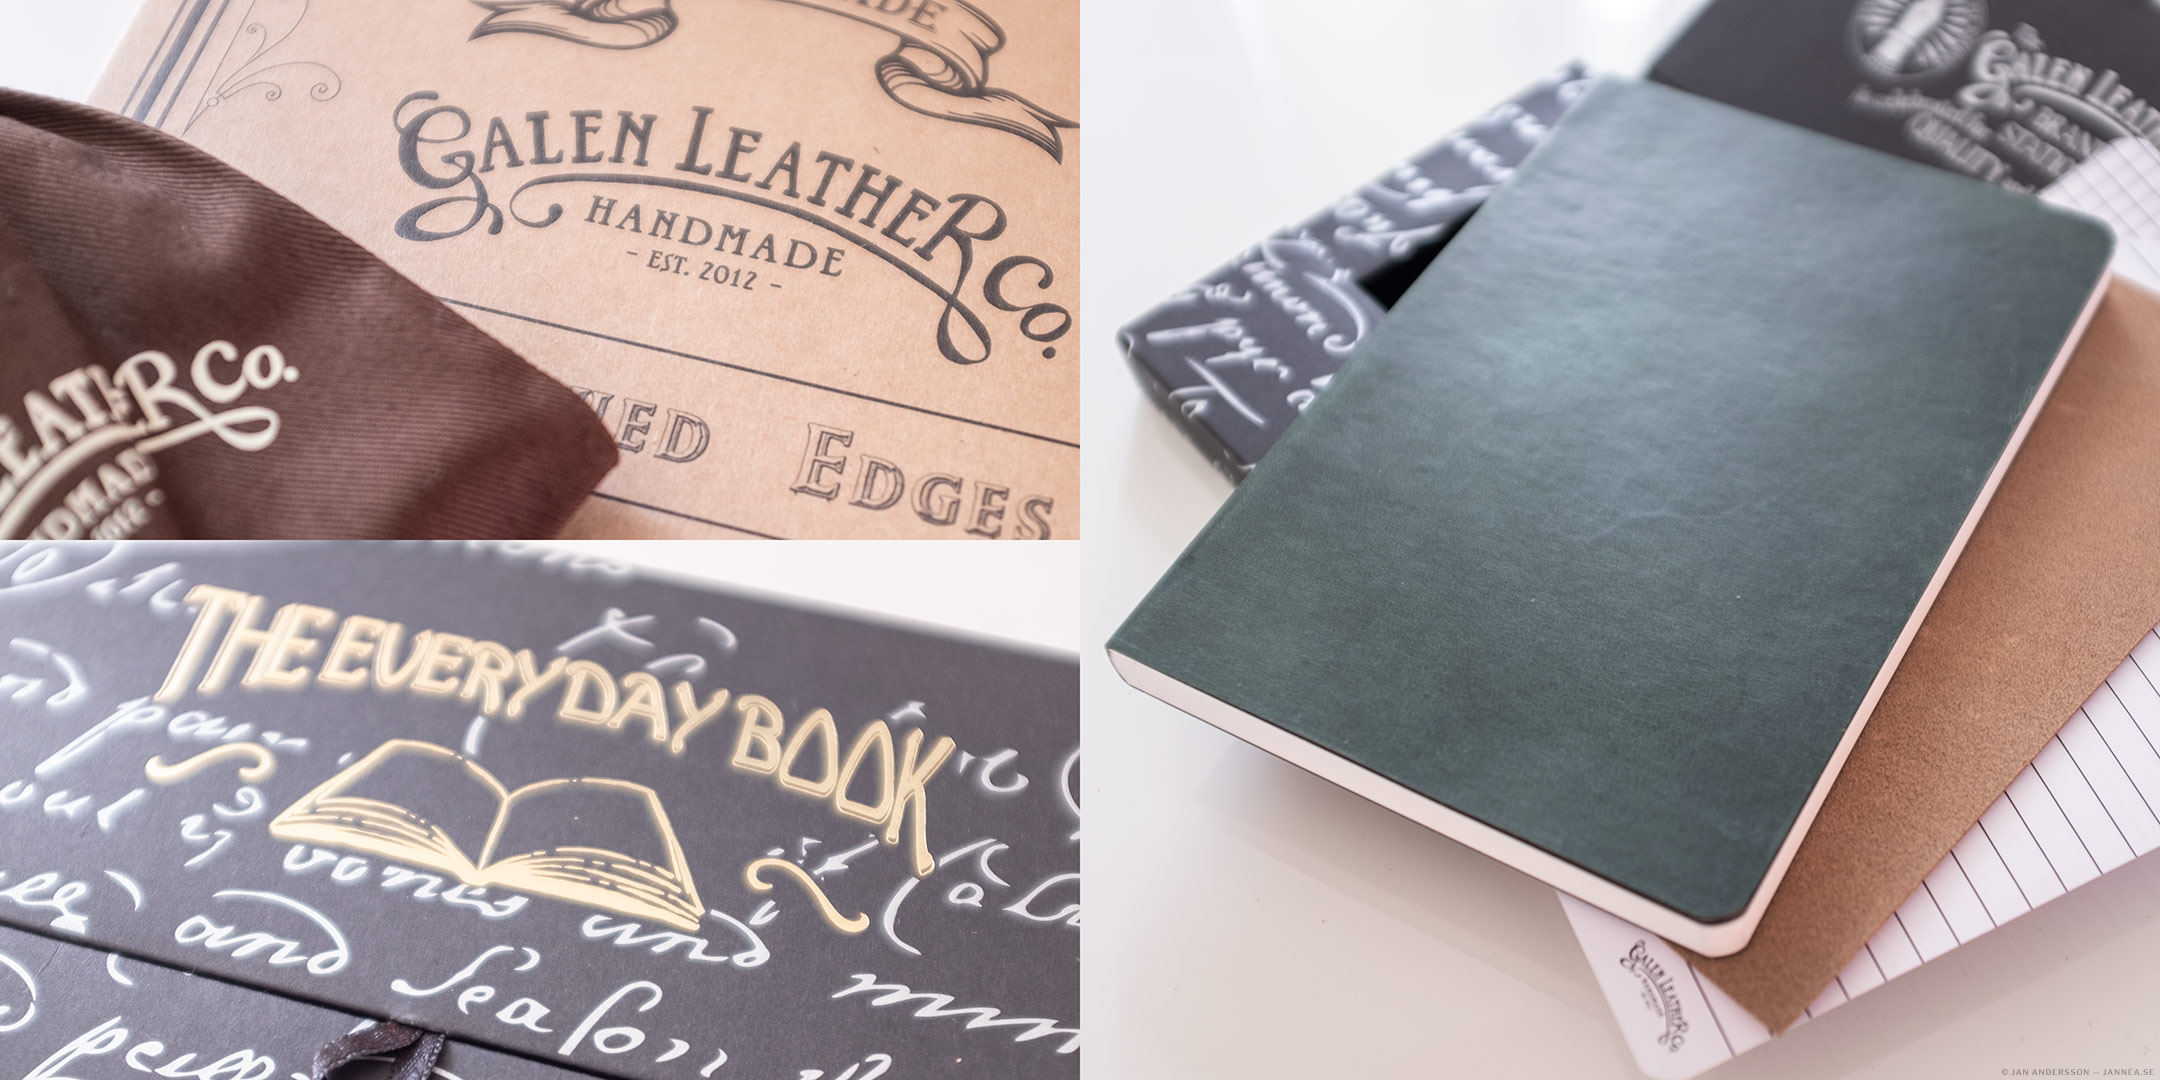 En bok med blanka blad — Galen Leather Notebook